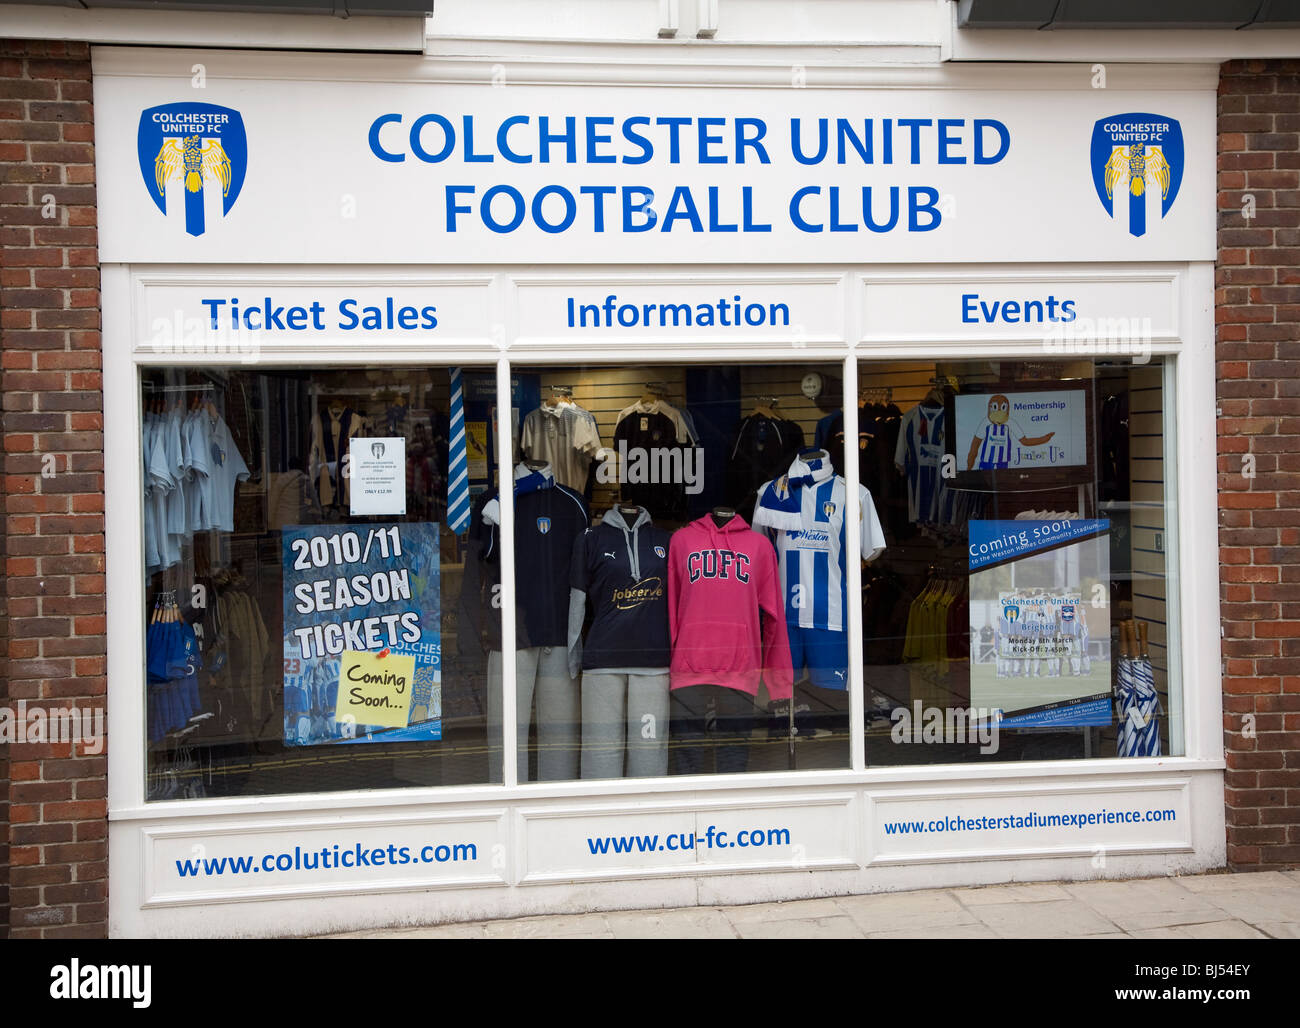 Club Shop Update! - News - Colchester United